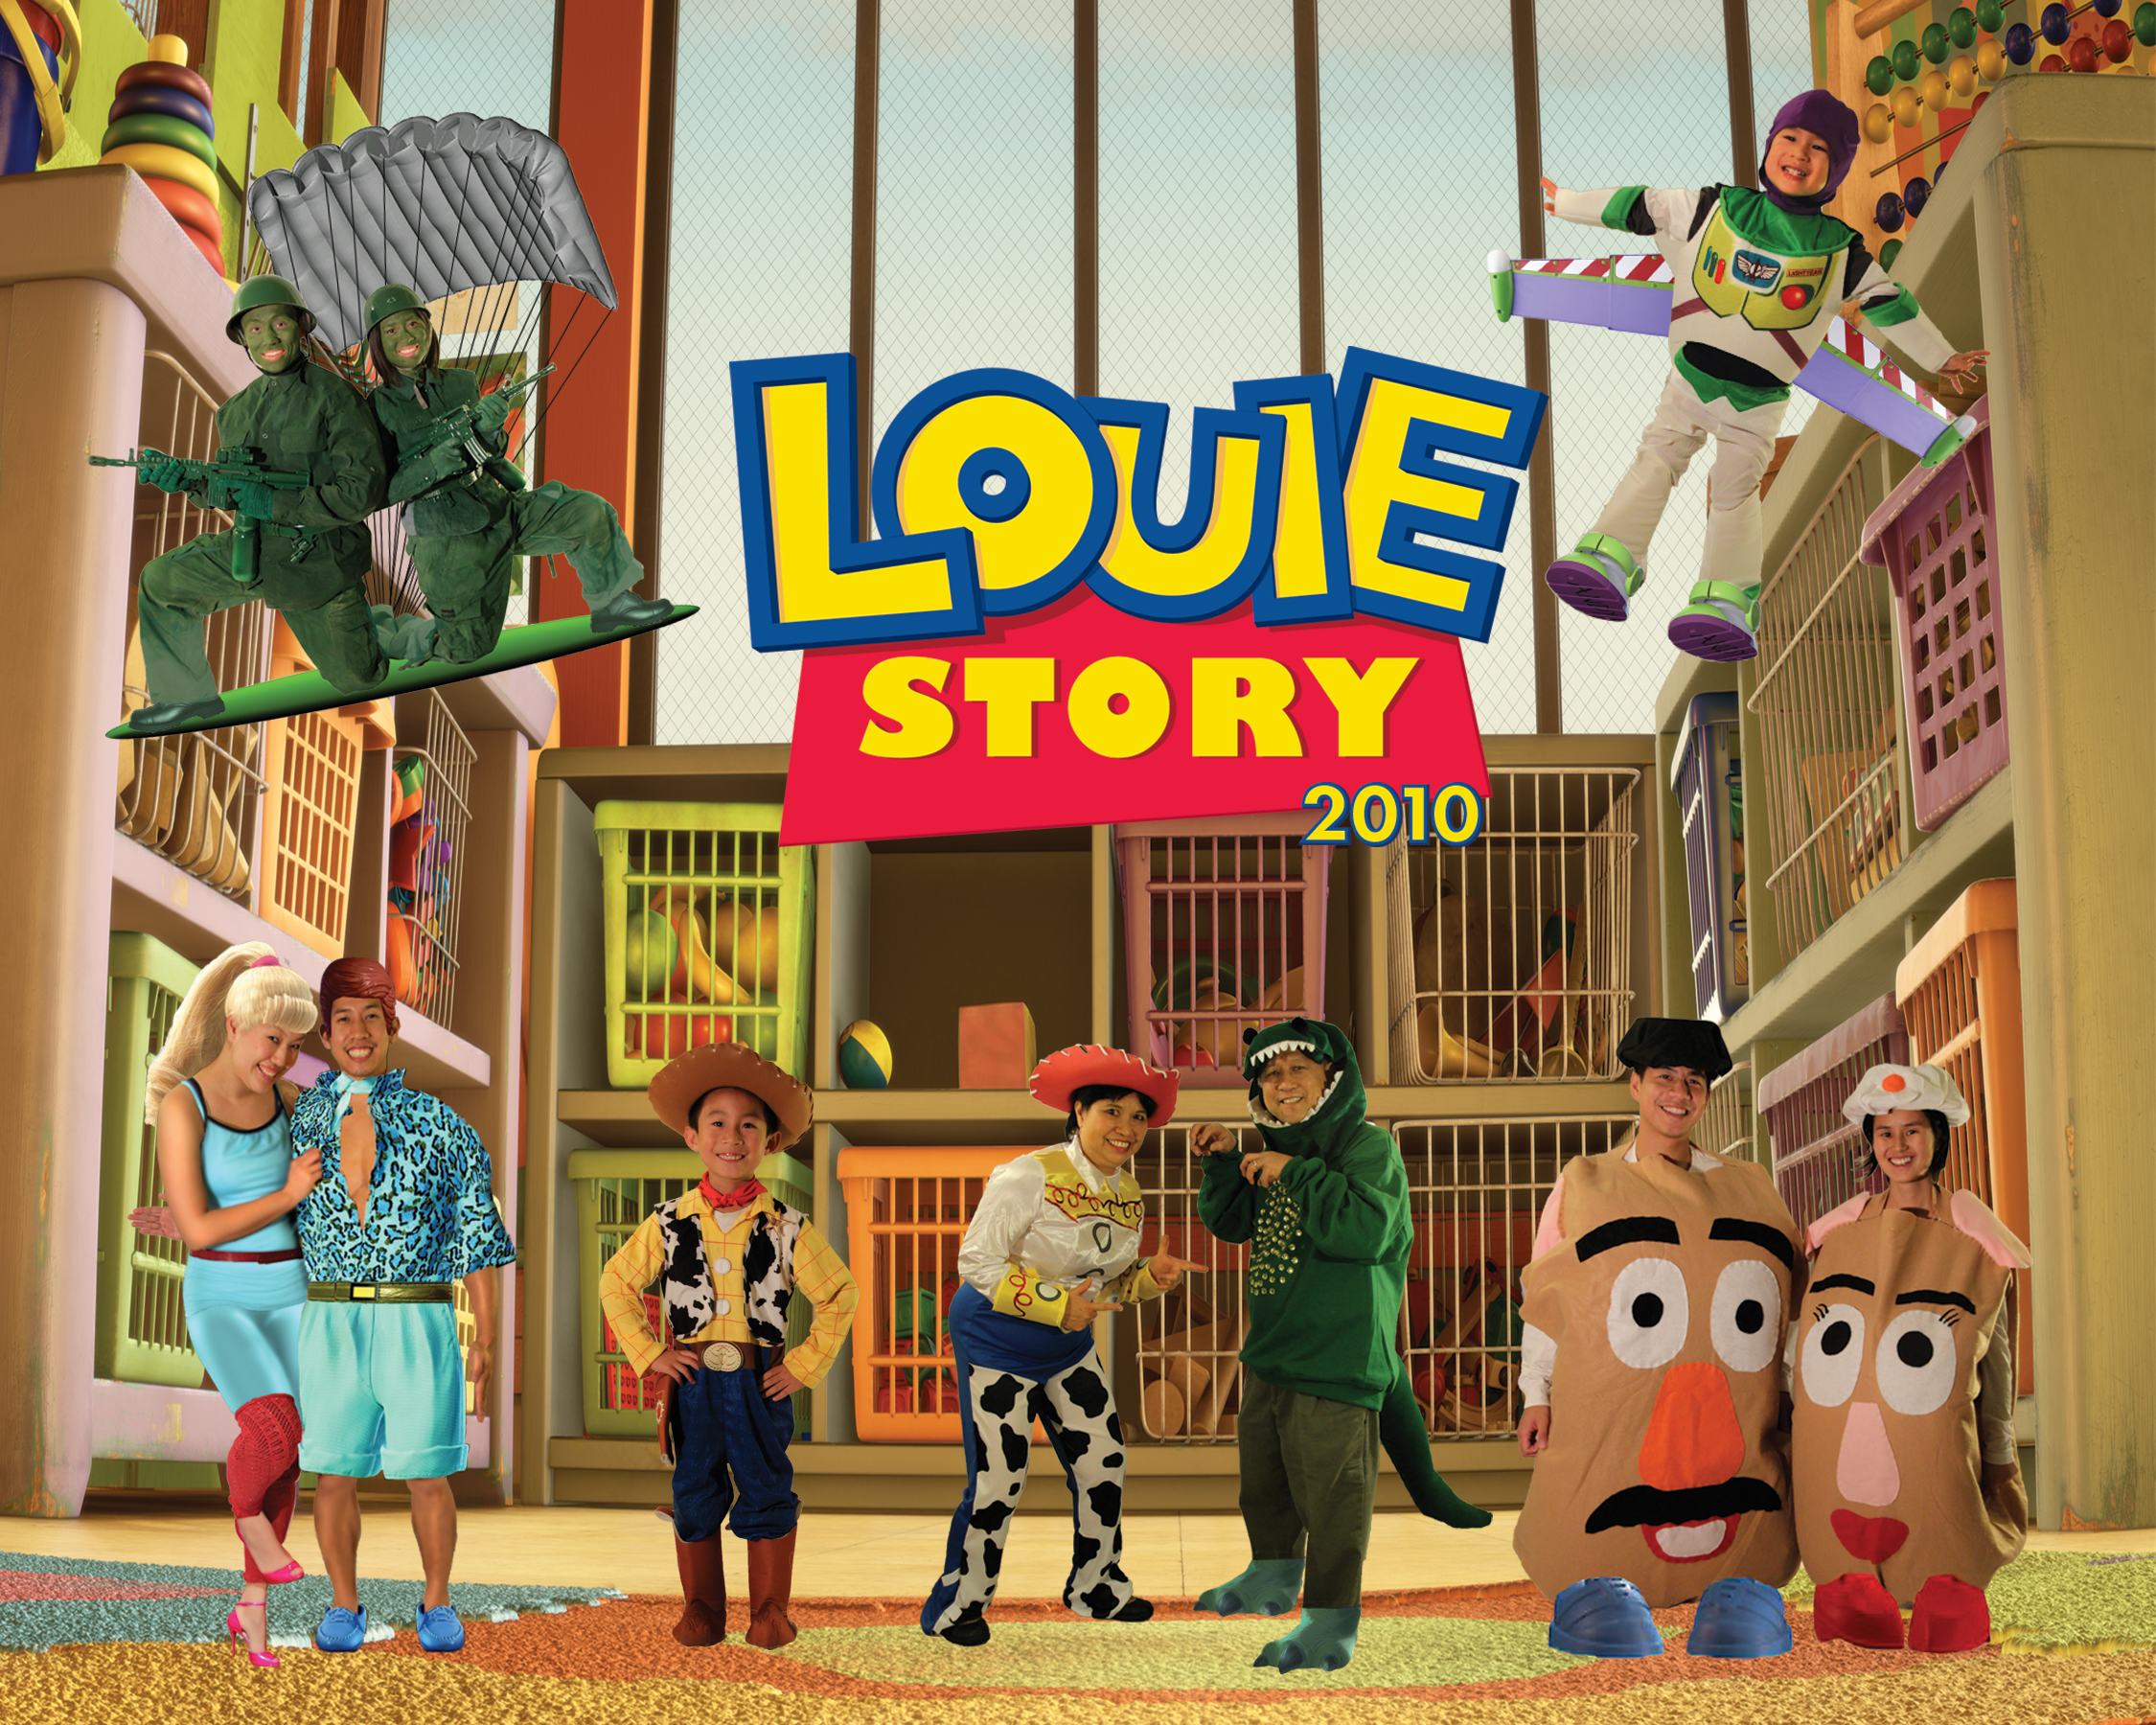 Louie Story 2010